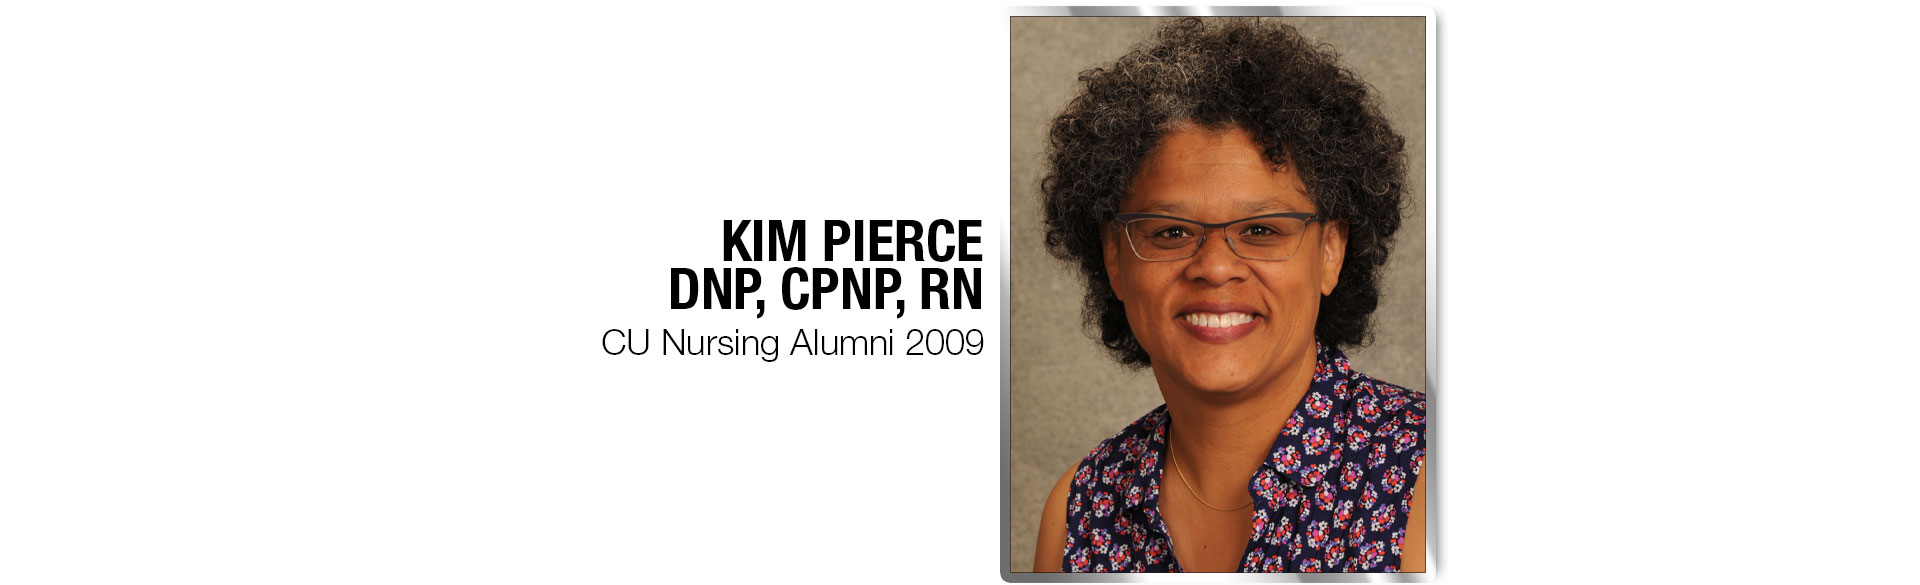 CU Nursing Alumni Kim Pierce, DNP, CPNP, RN